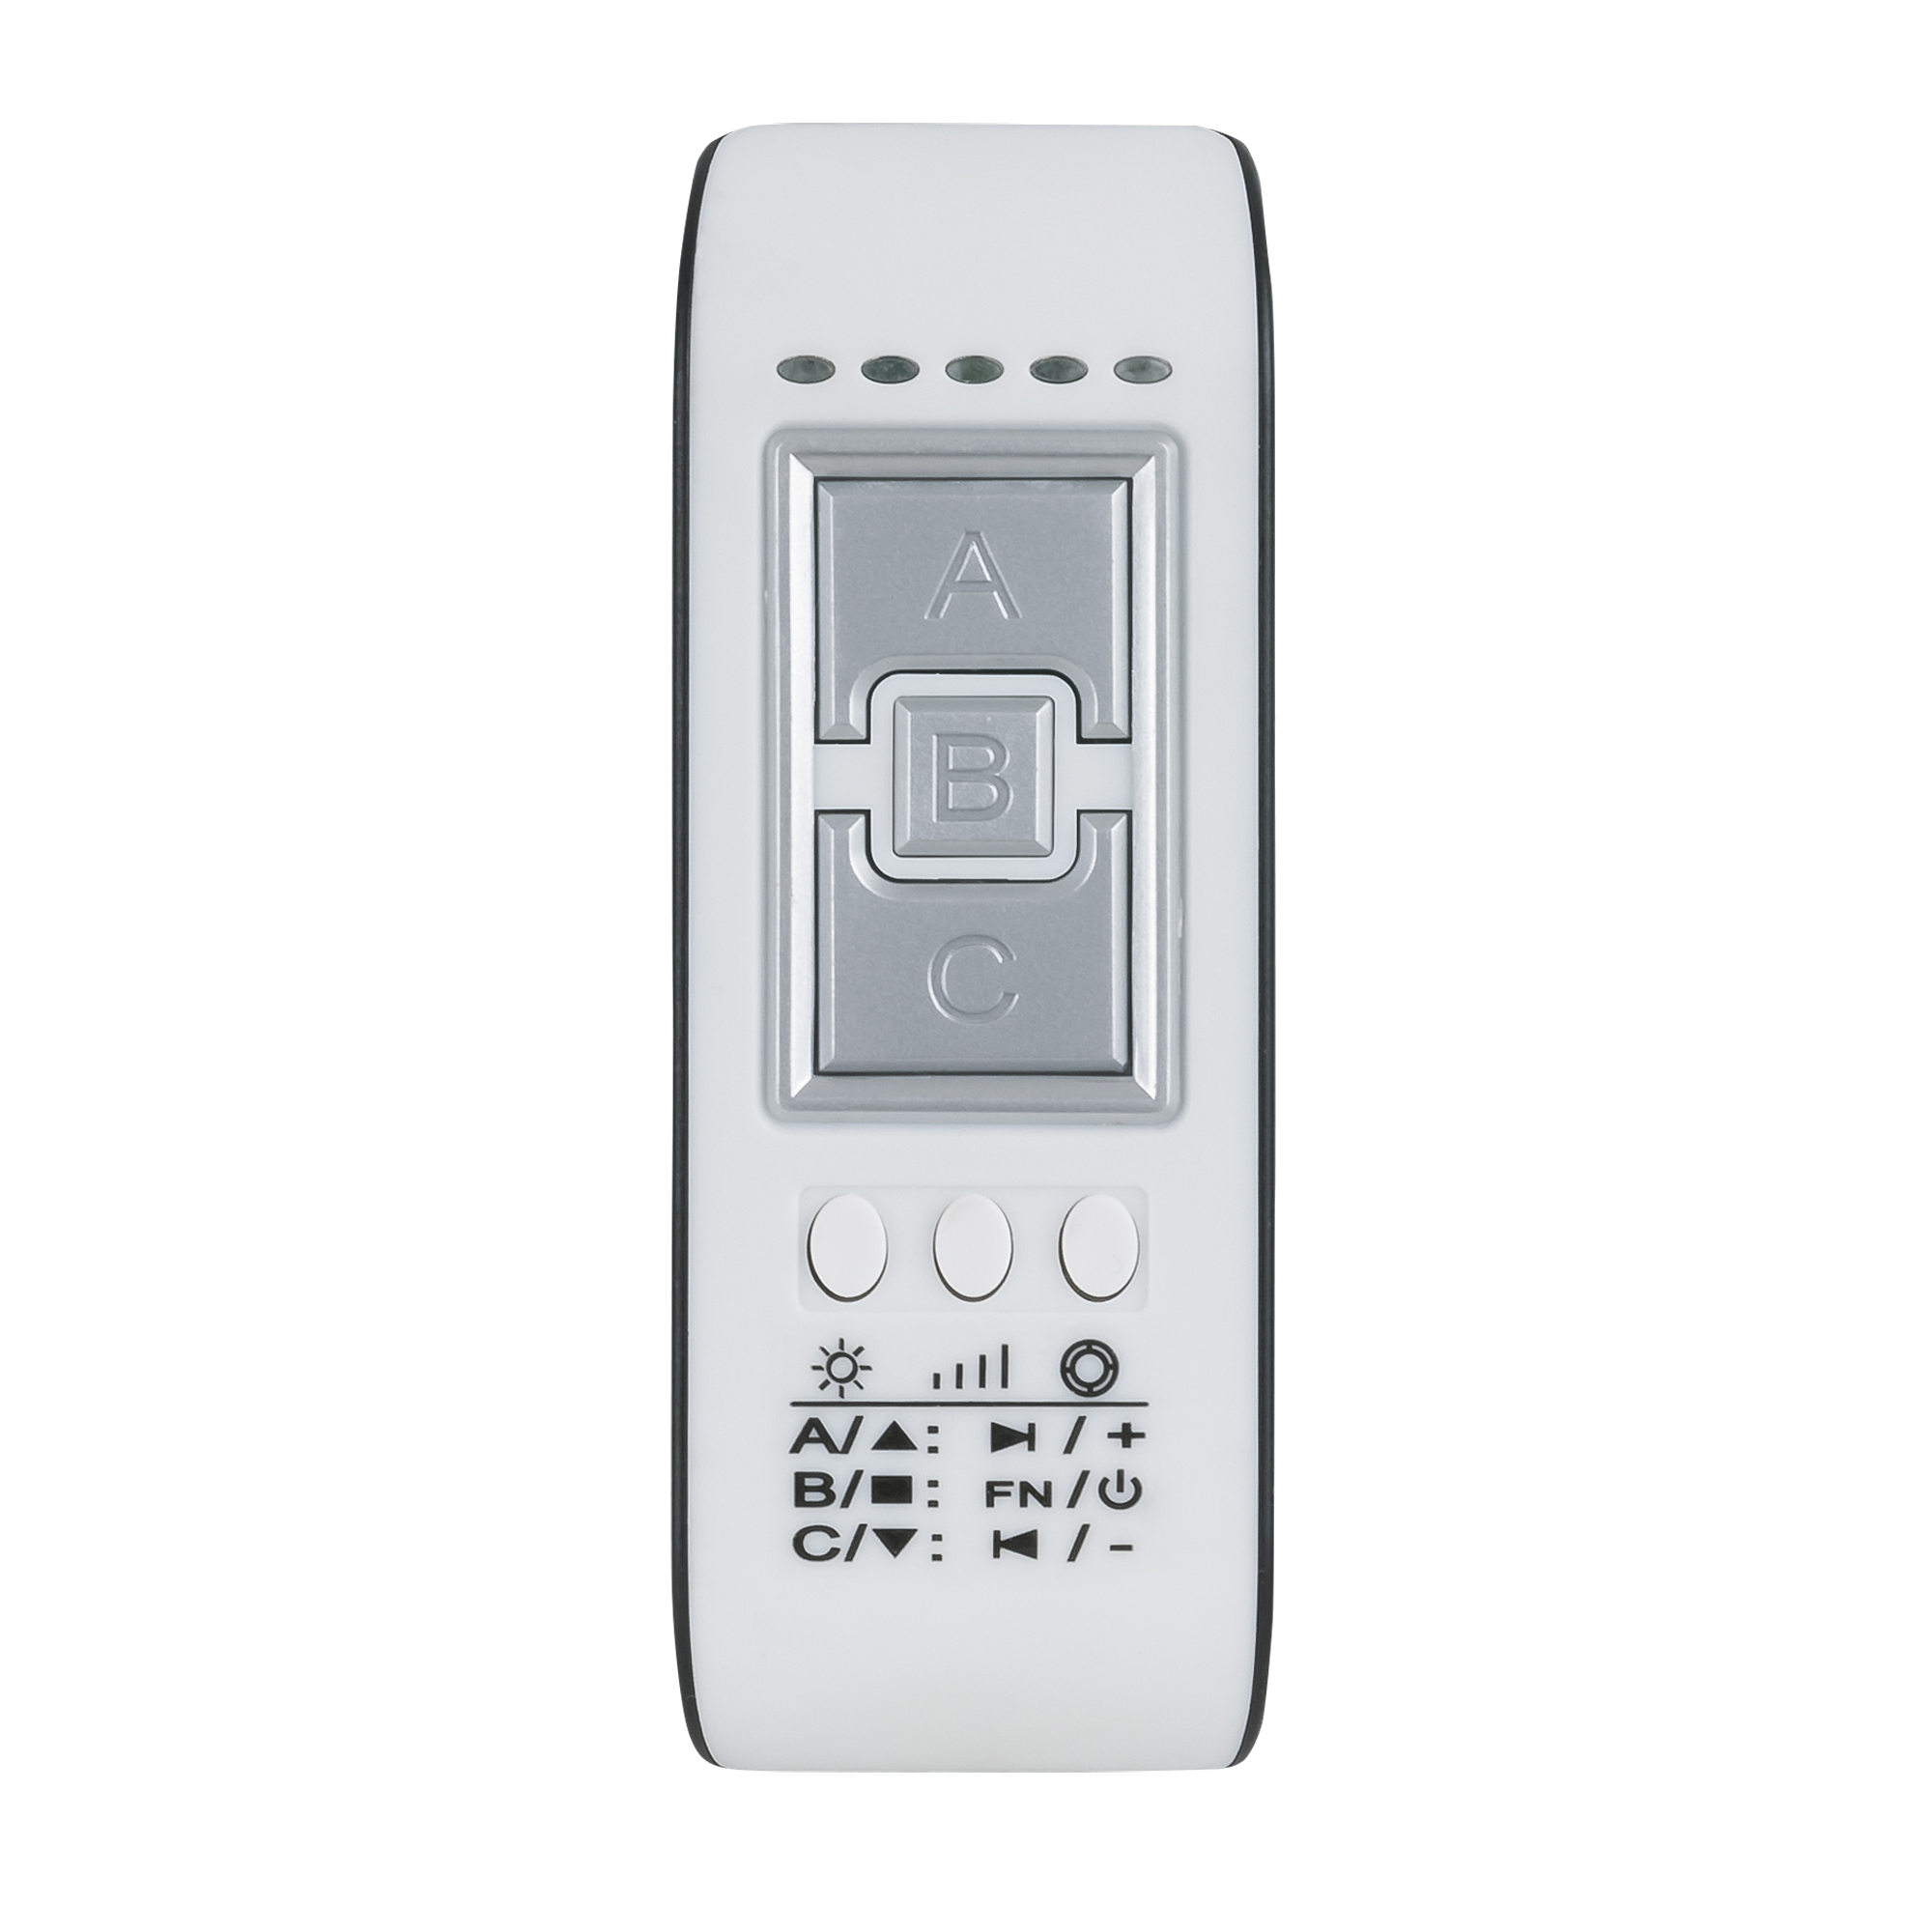 RF Remote Control for Dance Floor Sparkle - Onlinediscowinkel.nl